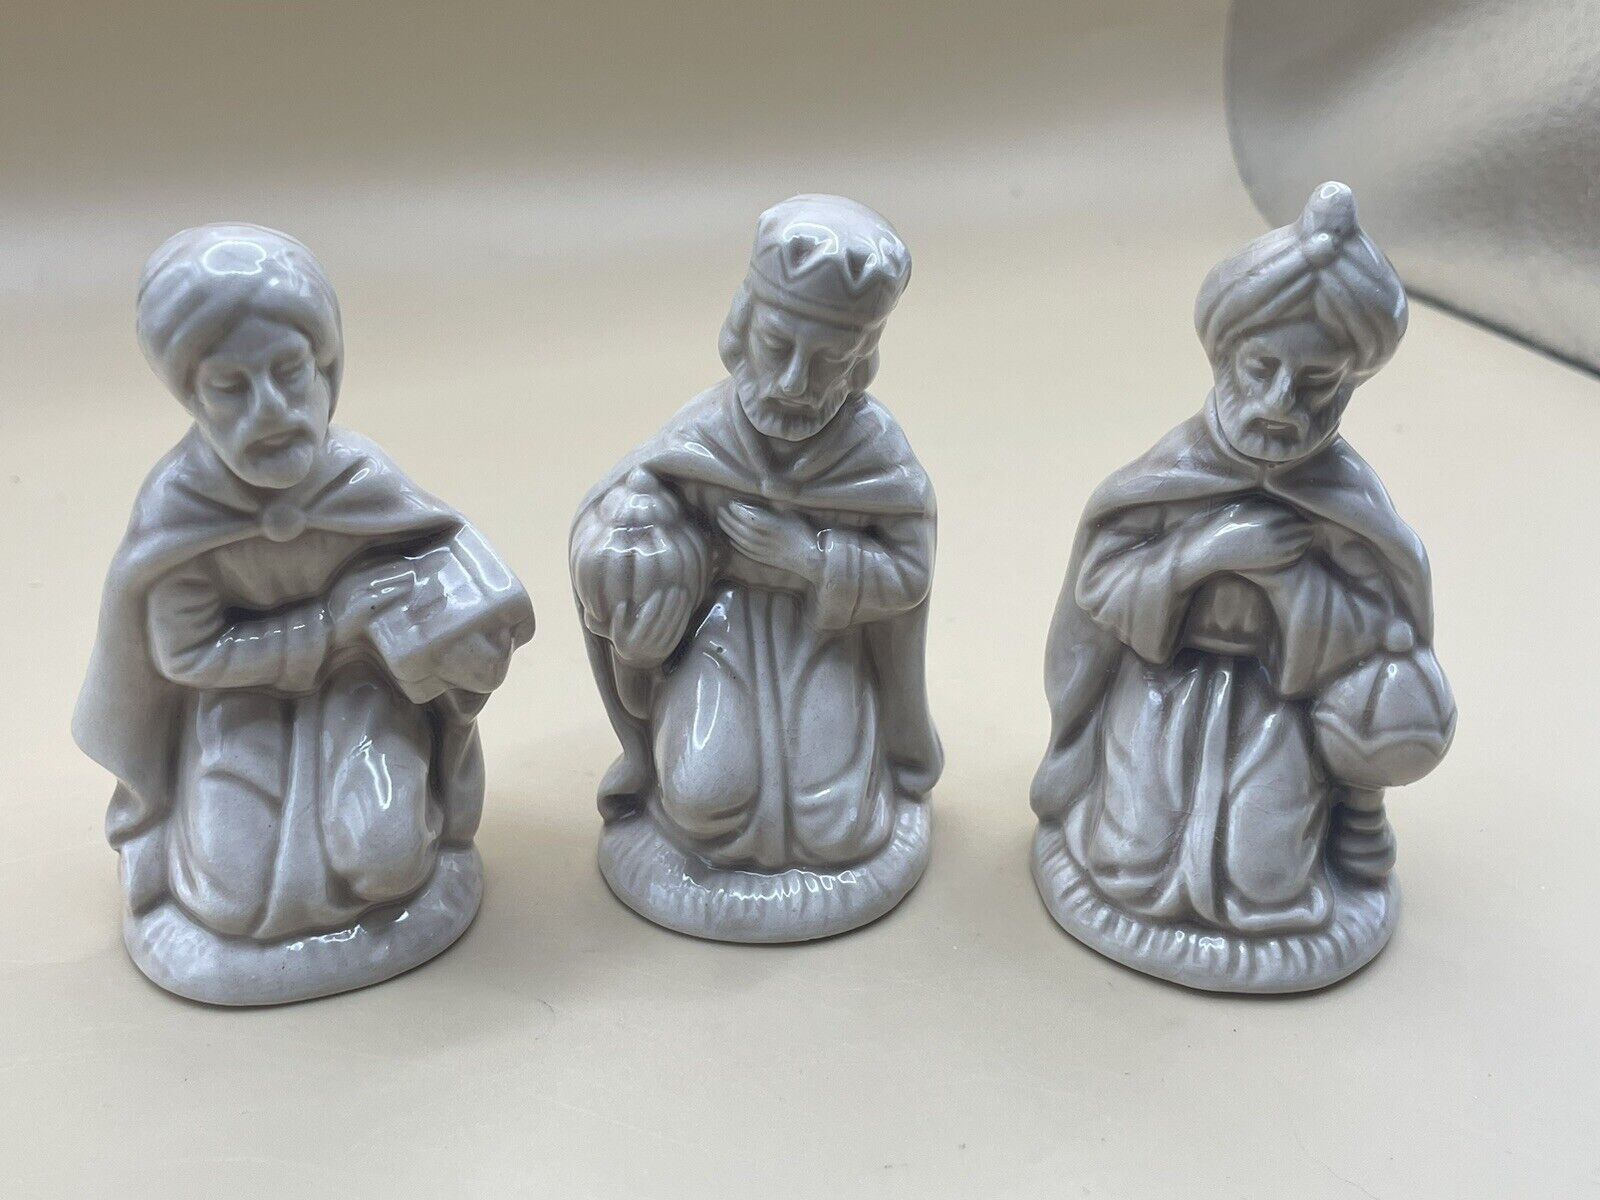 VTG Nativity Ceramic Glaze 3 Wisemen Figurines Christmas Decor 3”T Collectable